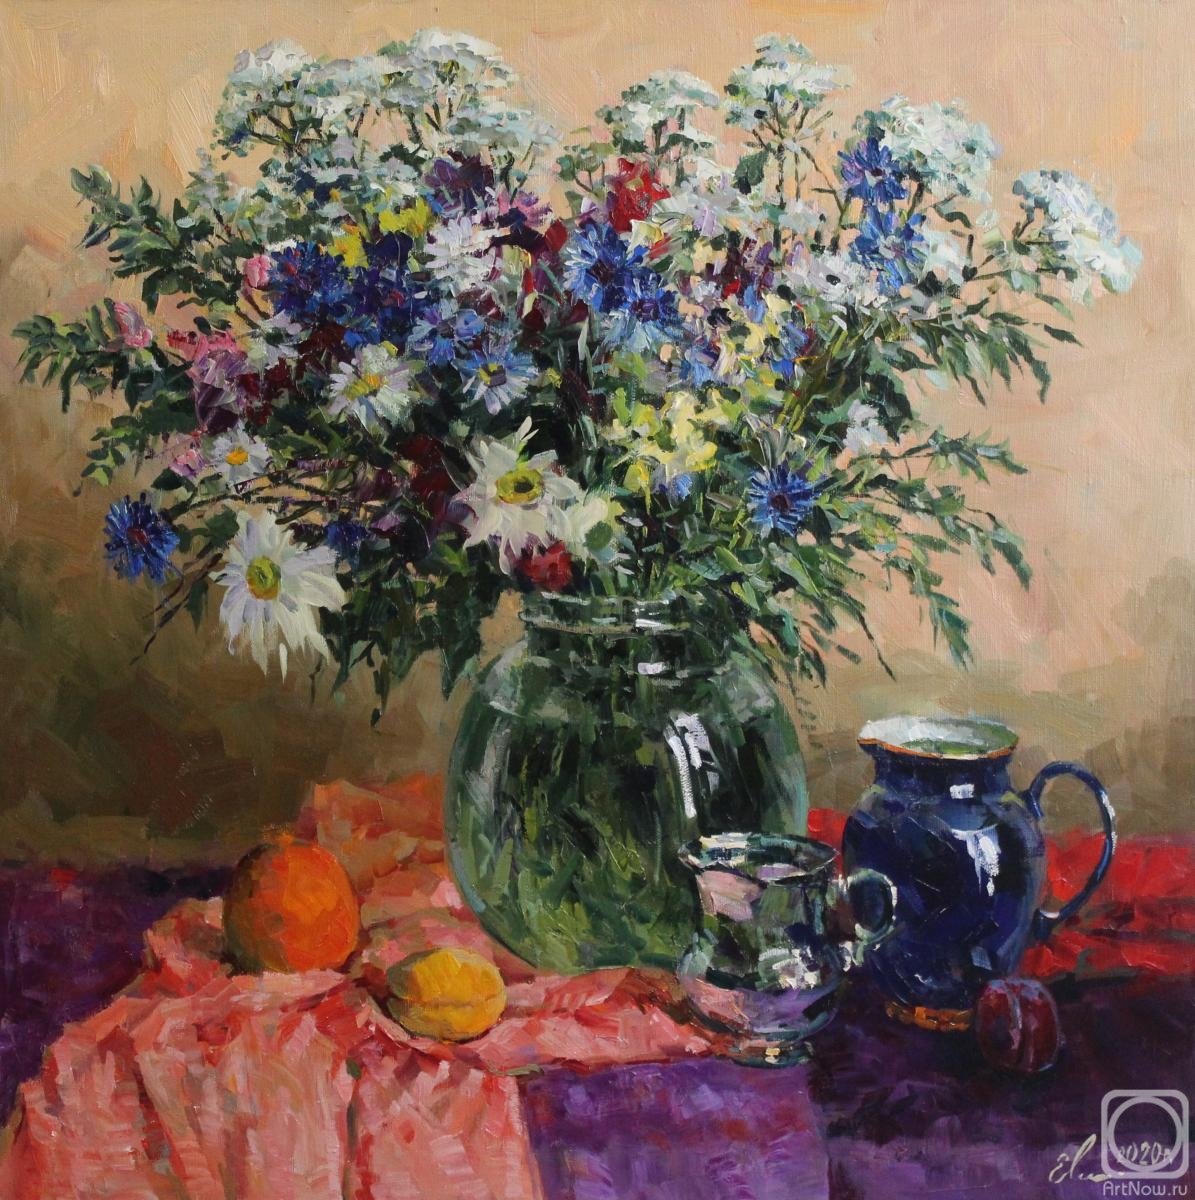 Malykh Evgeny. Summer bouquet